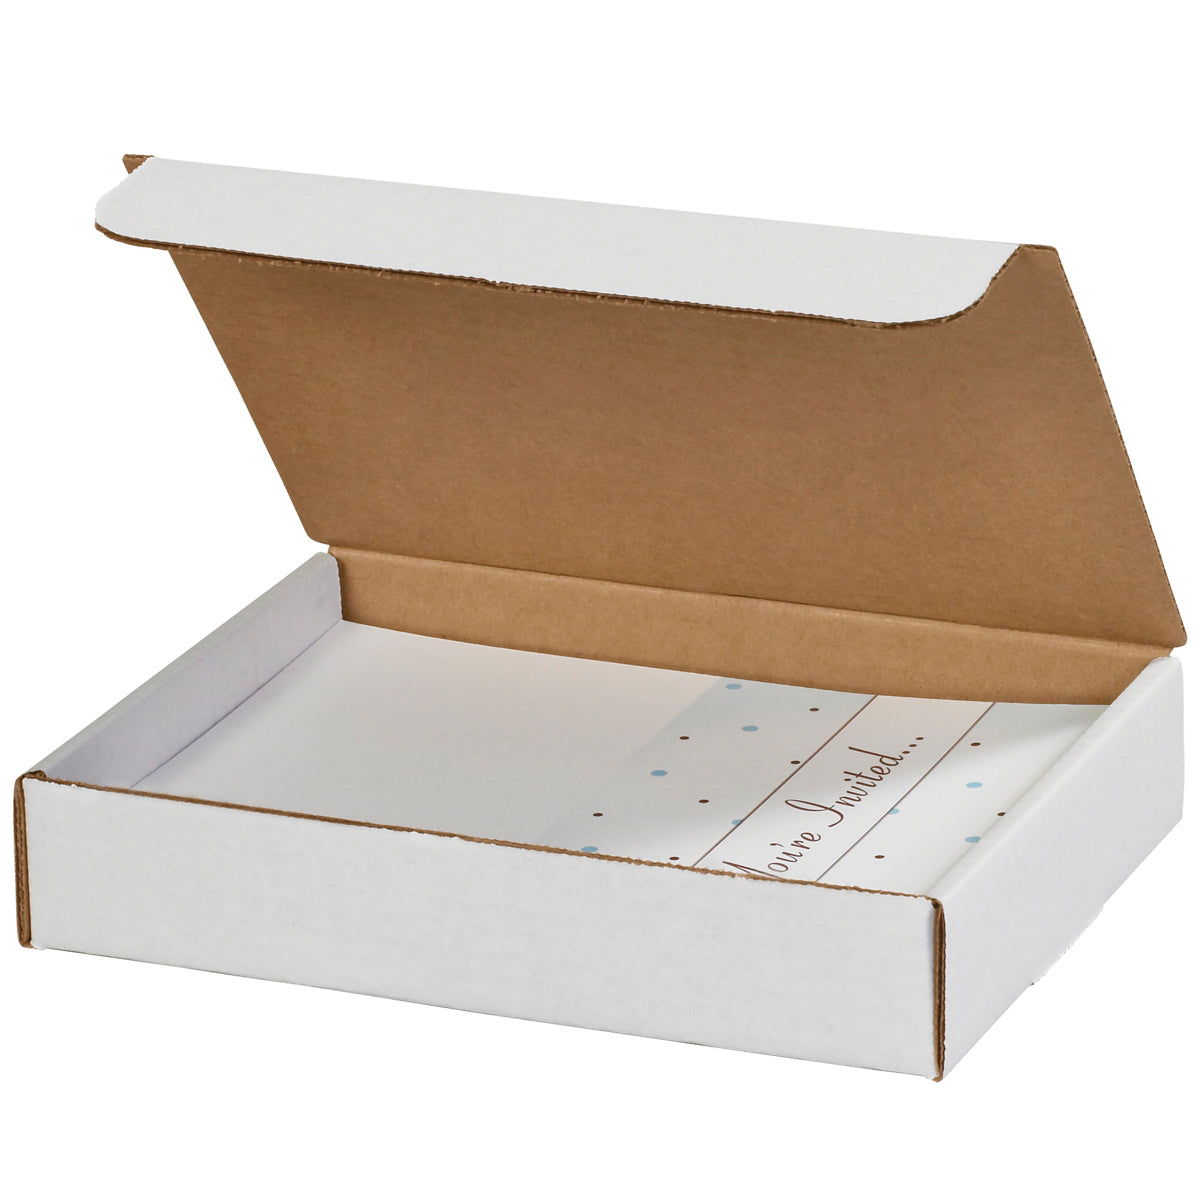 9 x 6 1/2 x 1 3/4 White Literature Mailers - PackagingSupplies.com